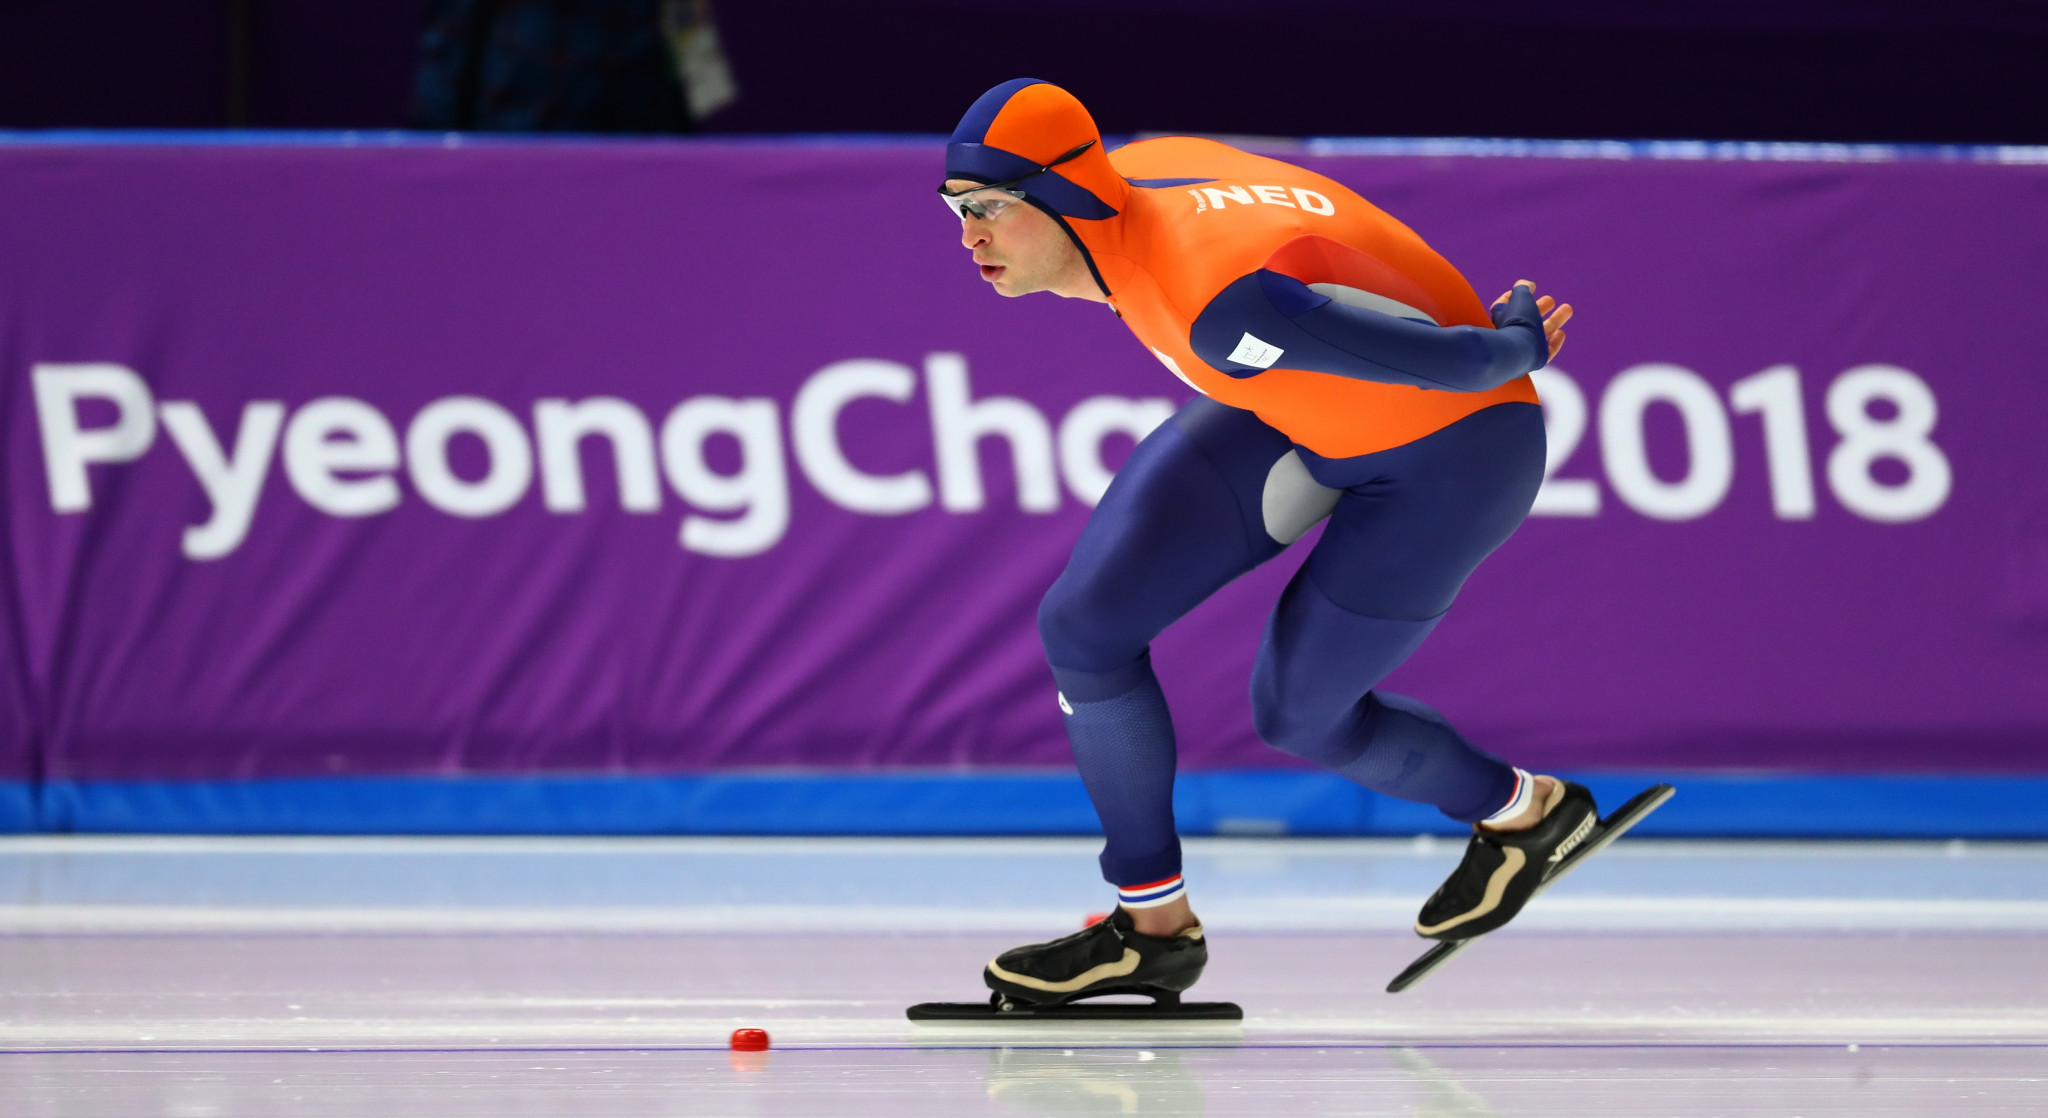 Kramer skates into history books with third consecutive Olympic 5,000m title at Pyeongchang 2018